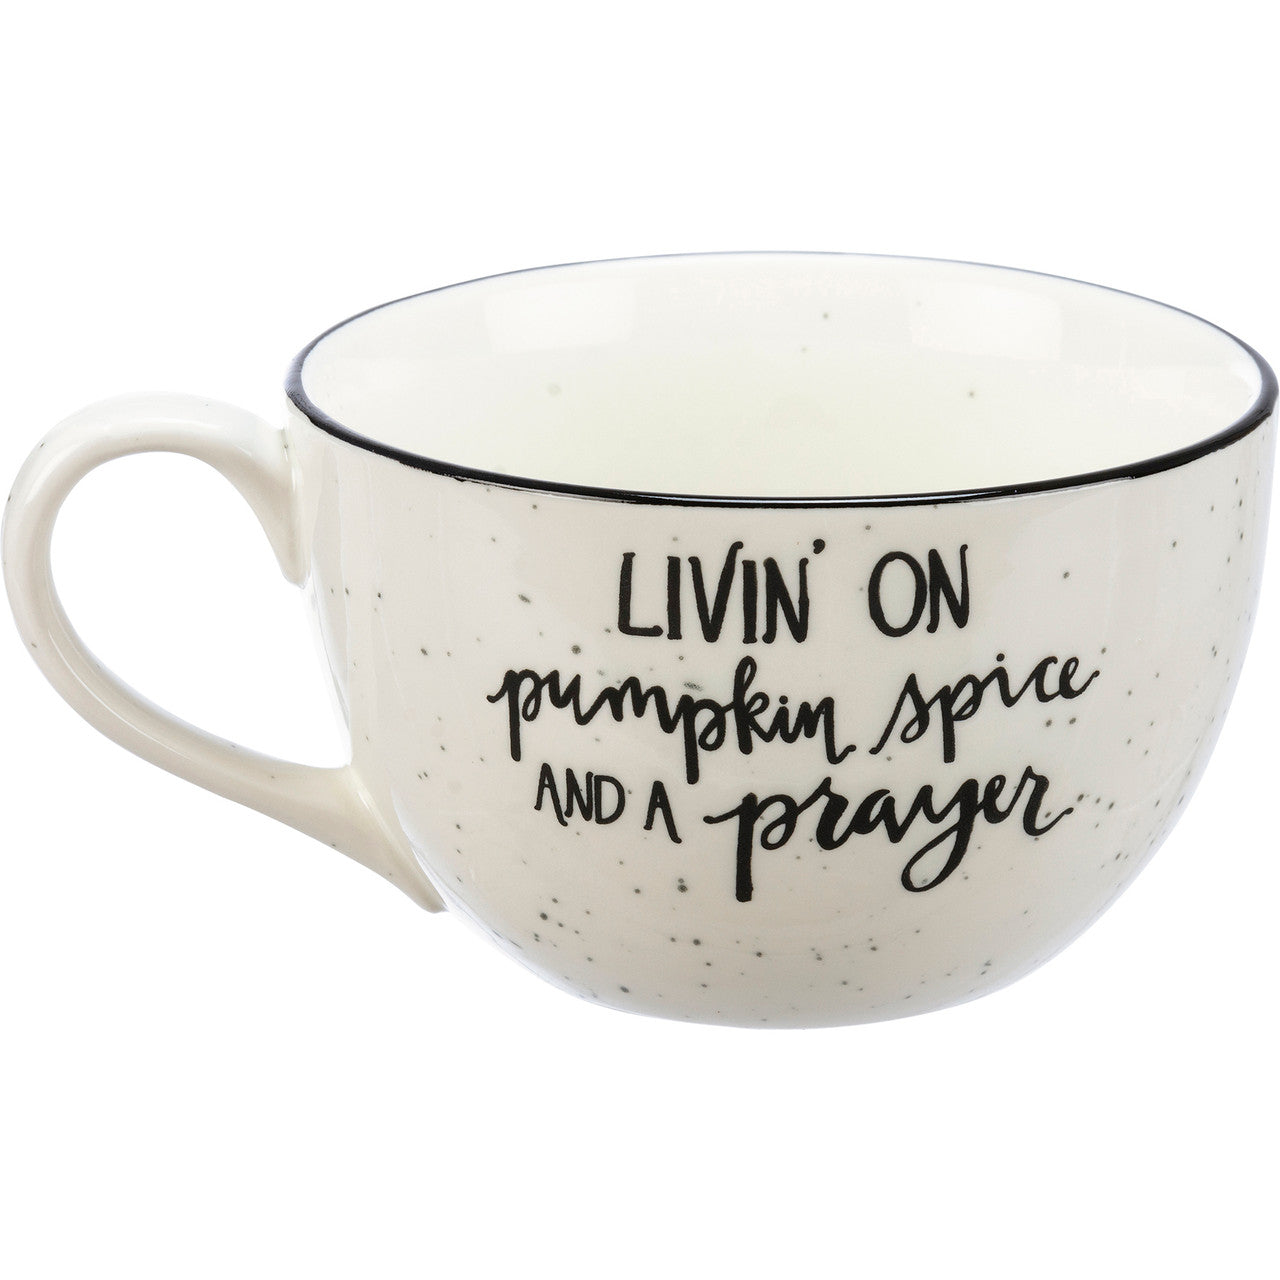 Primitives by Kathy "Livin On Pumpkin Spice and a Prayer" mug set